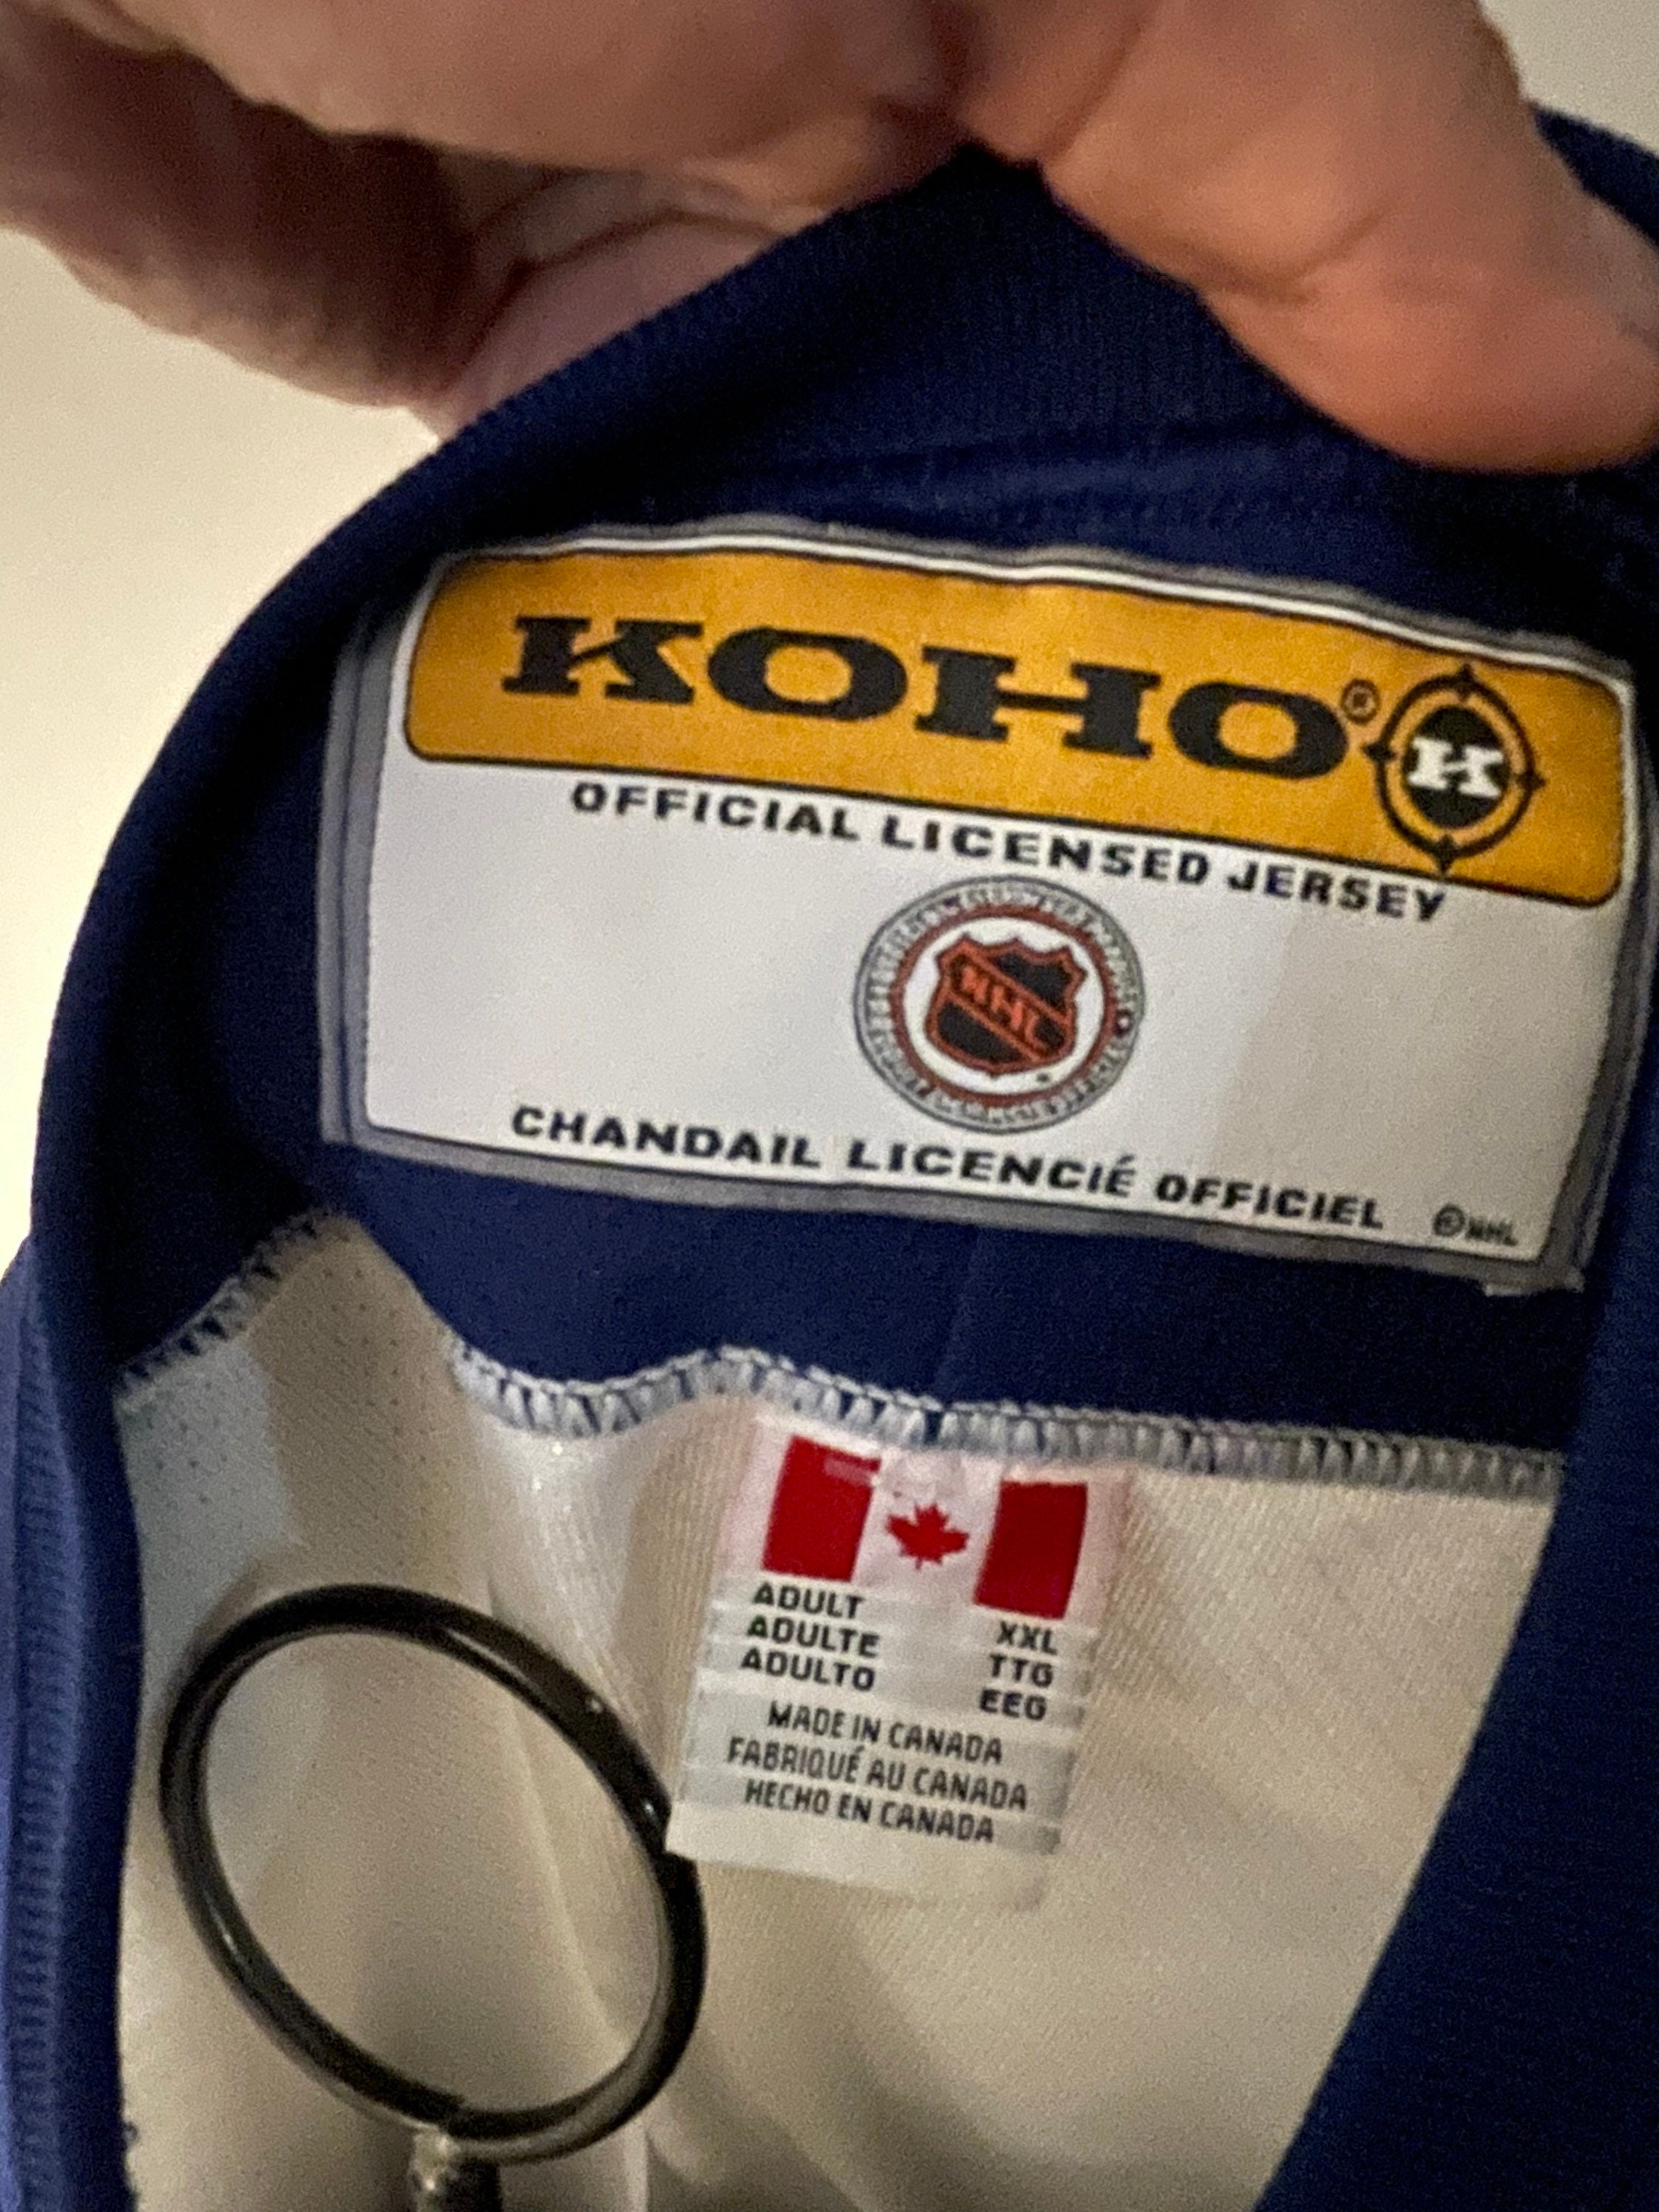 Toronto Maple Leafs Koho Retro Jersey